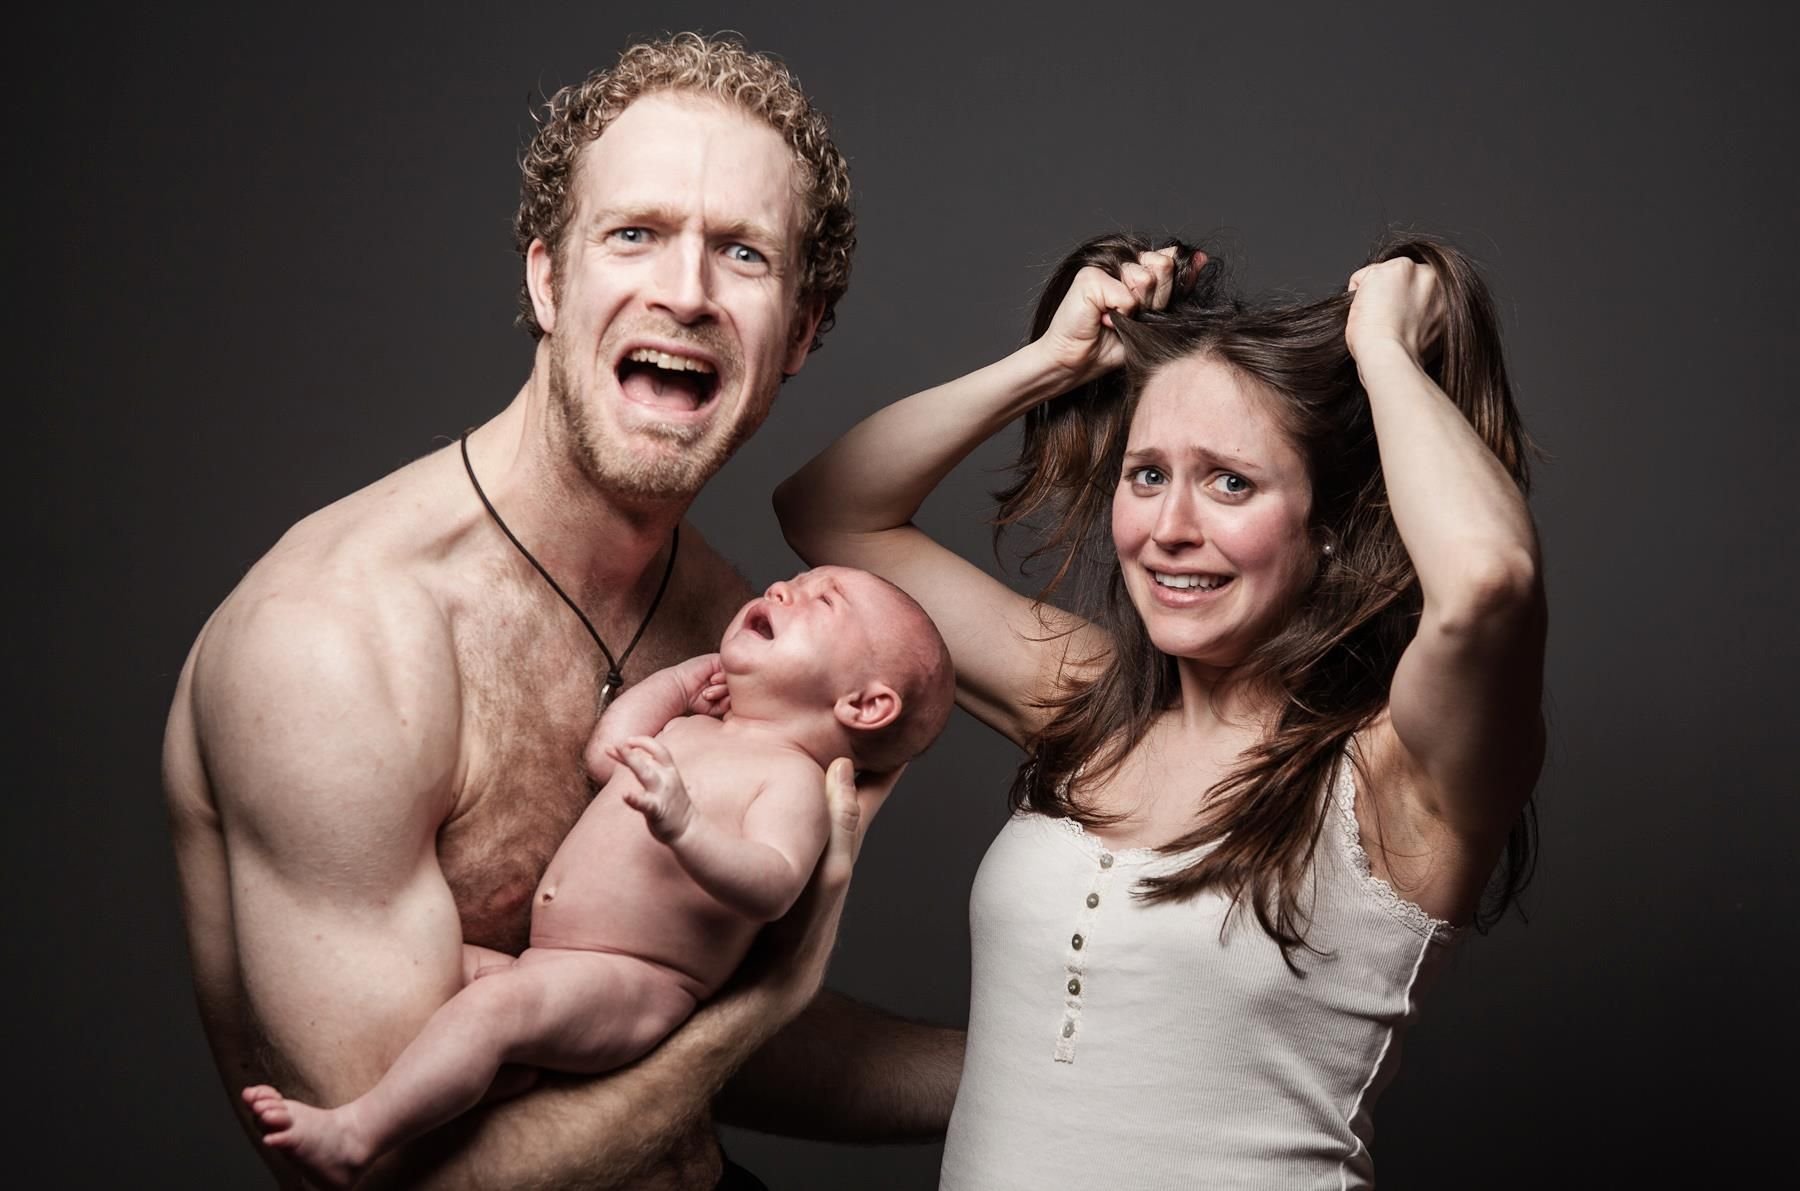 Реклама мамы папы. Мужчина с ребенком на руках. Смешные семейные фотосессии. Смешная фотосессия семьи. Ребенок на руках у папы.